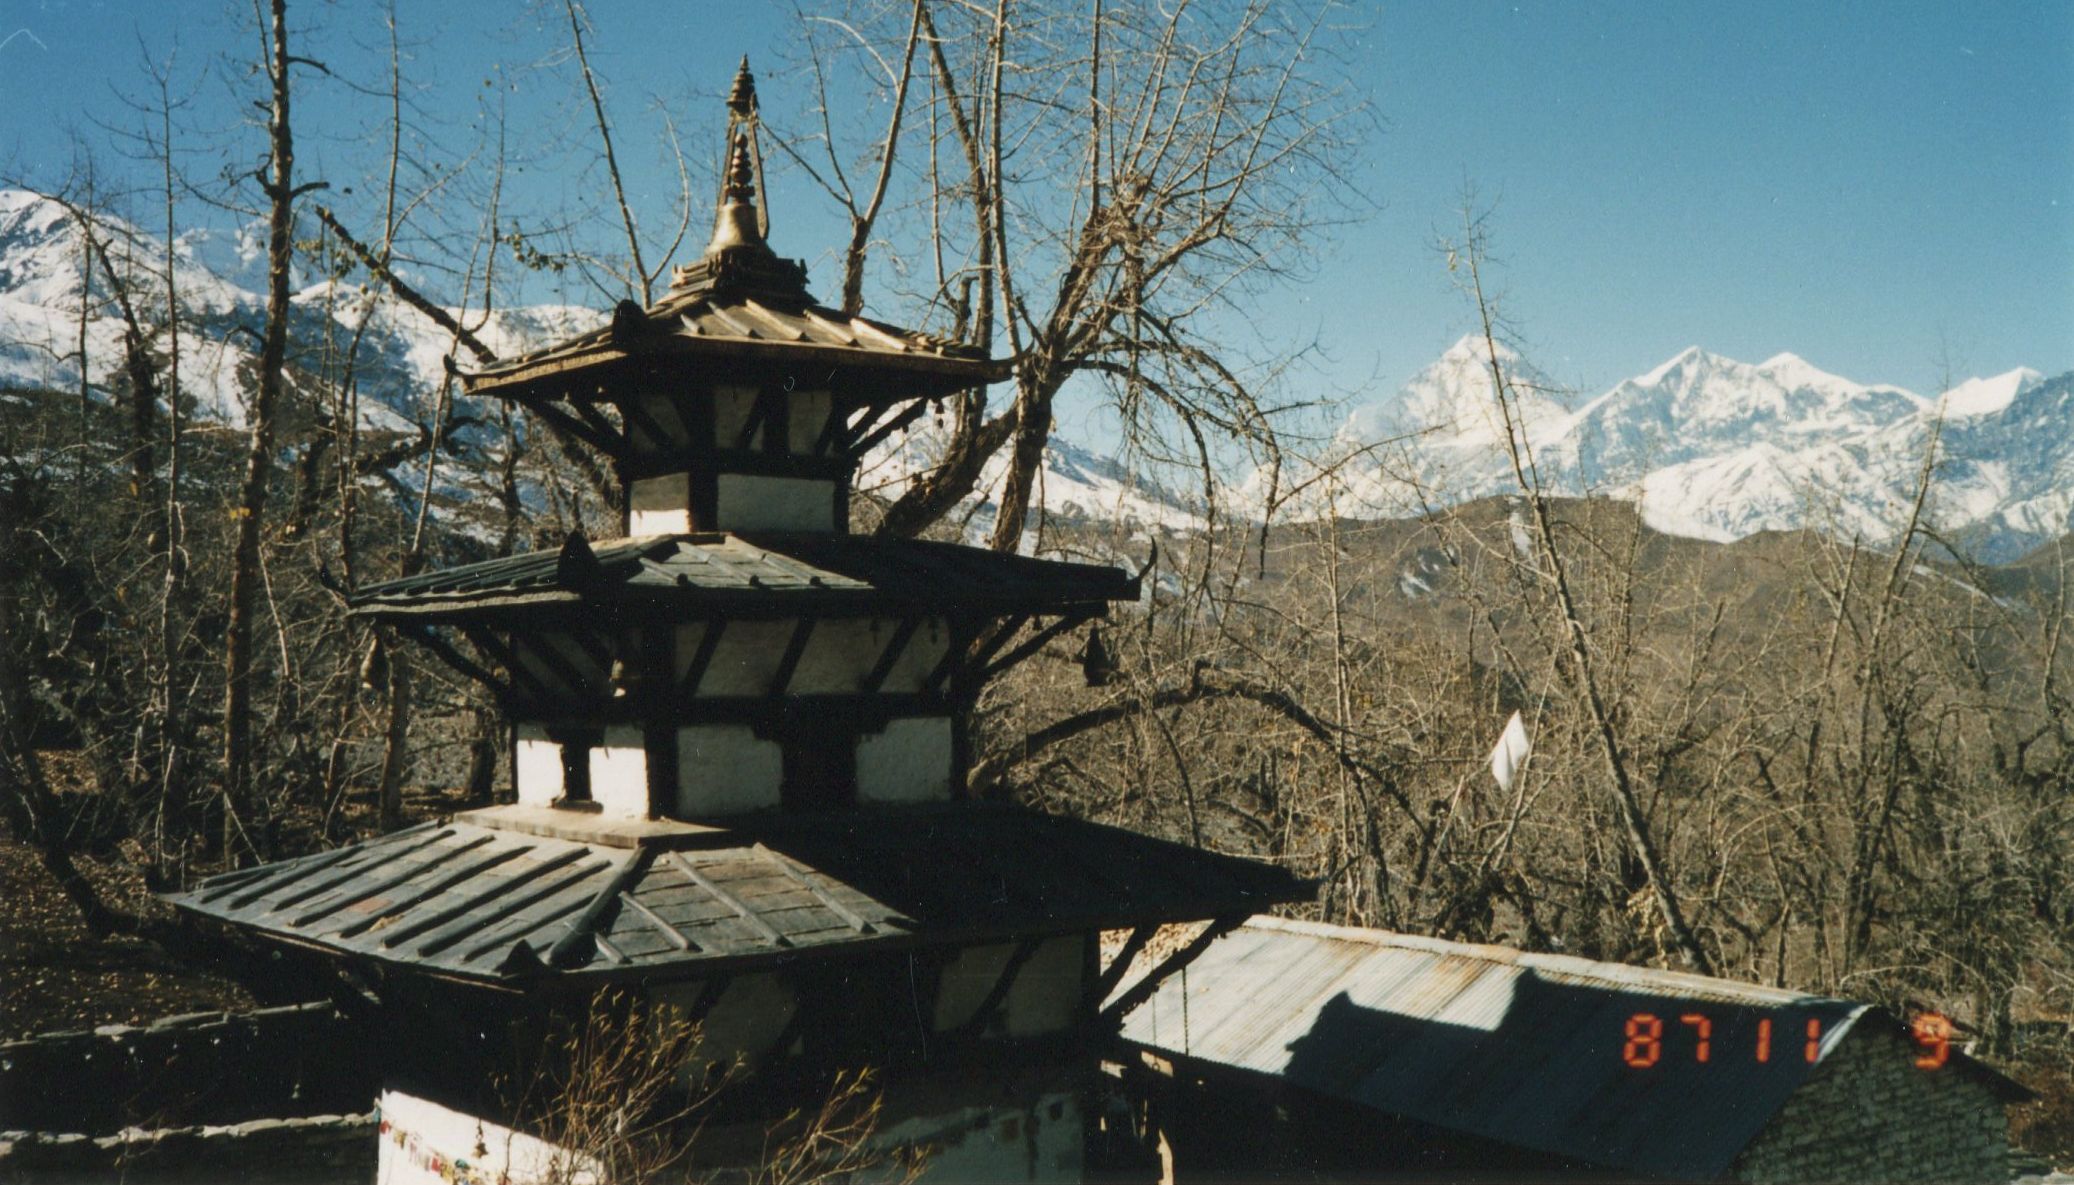 Dhaulagiri and Tukuche Peak from Temple at Muktinath